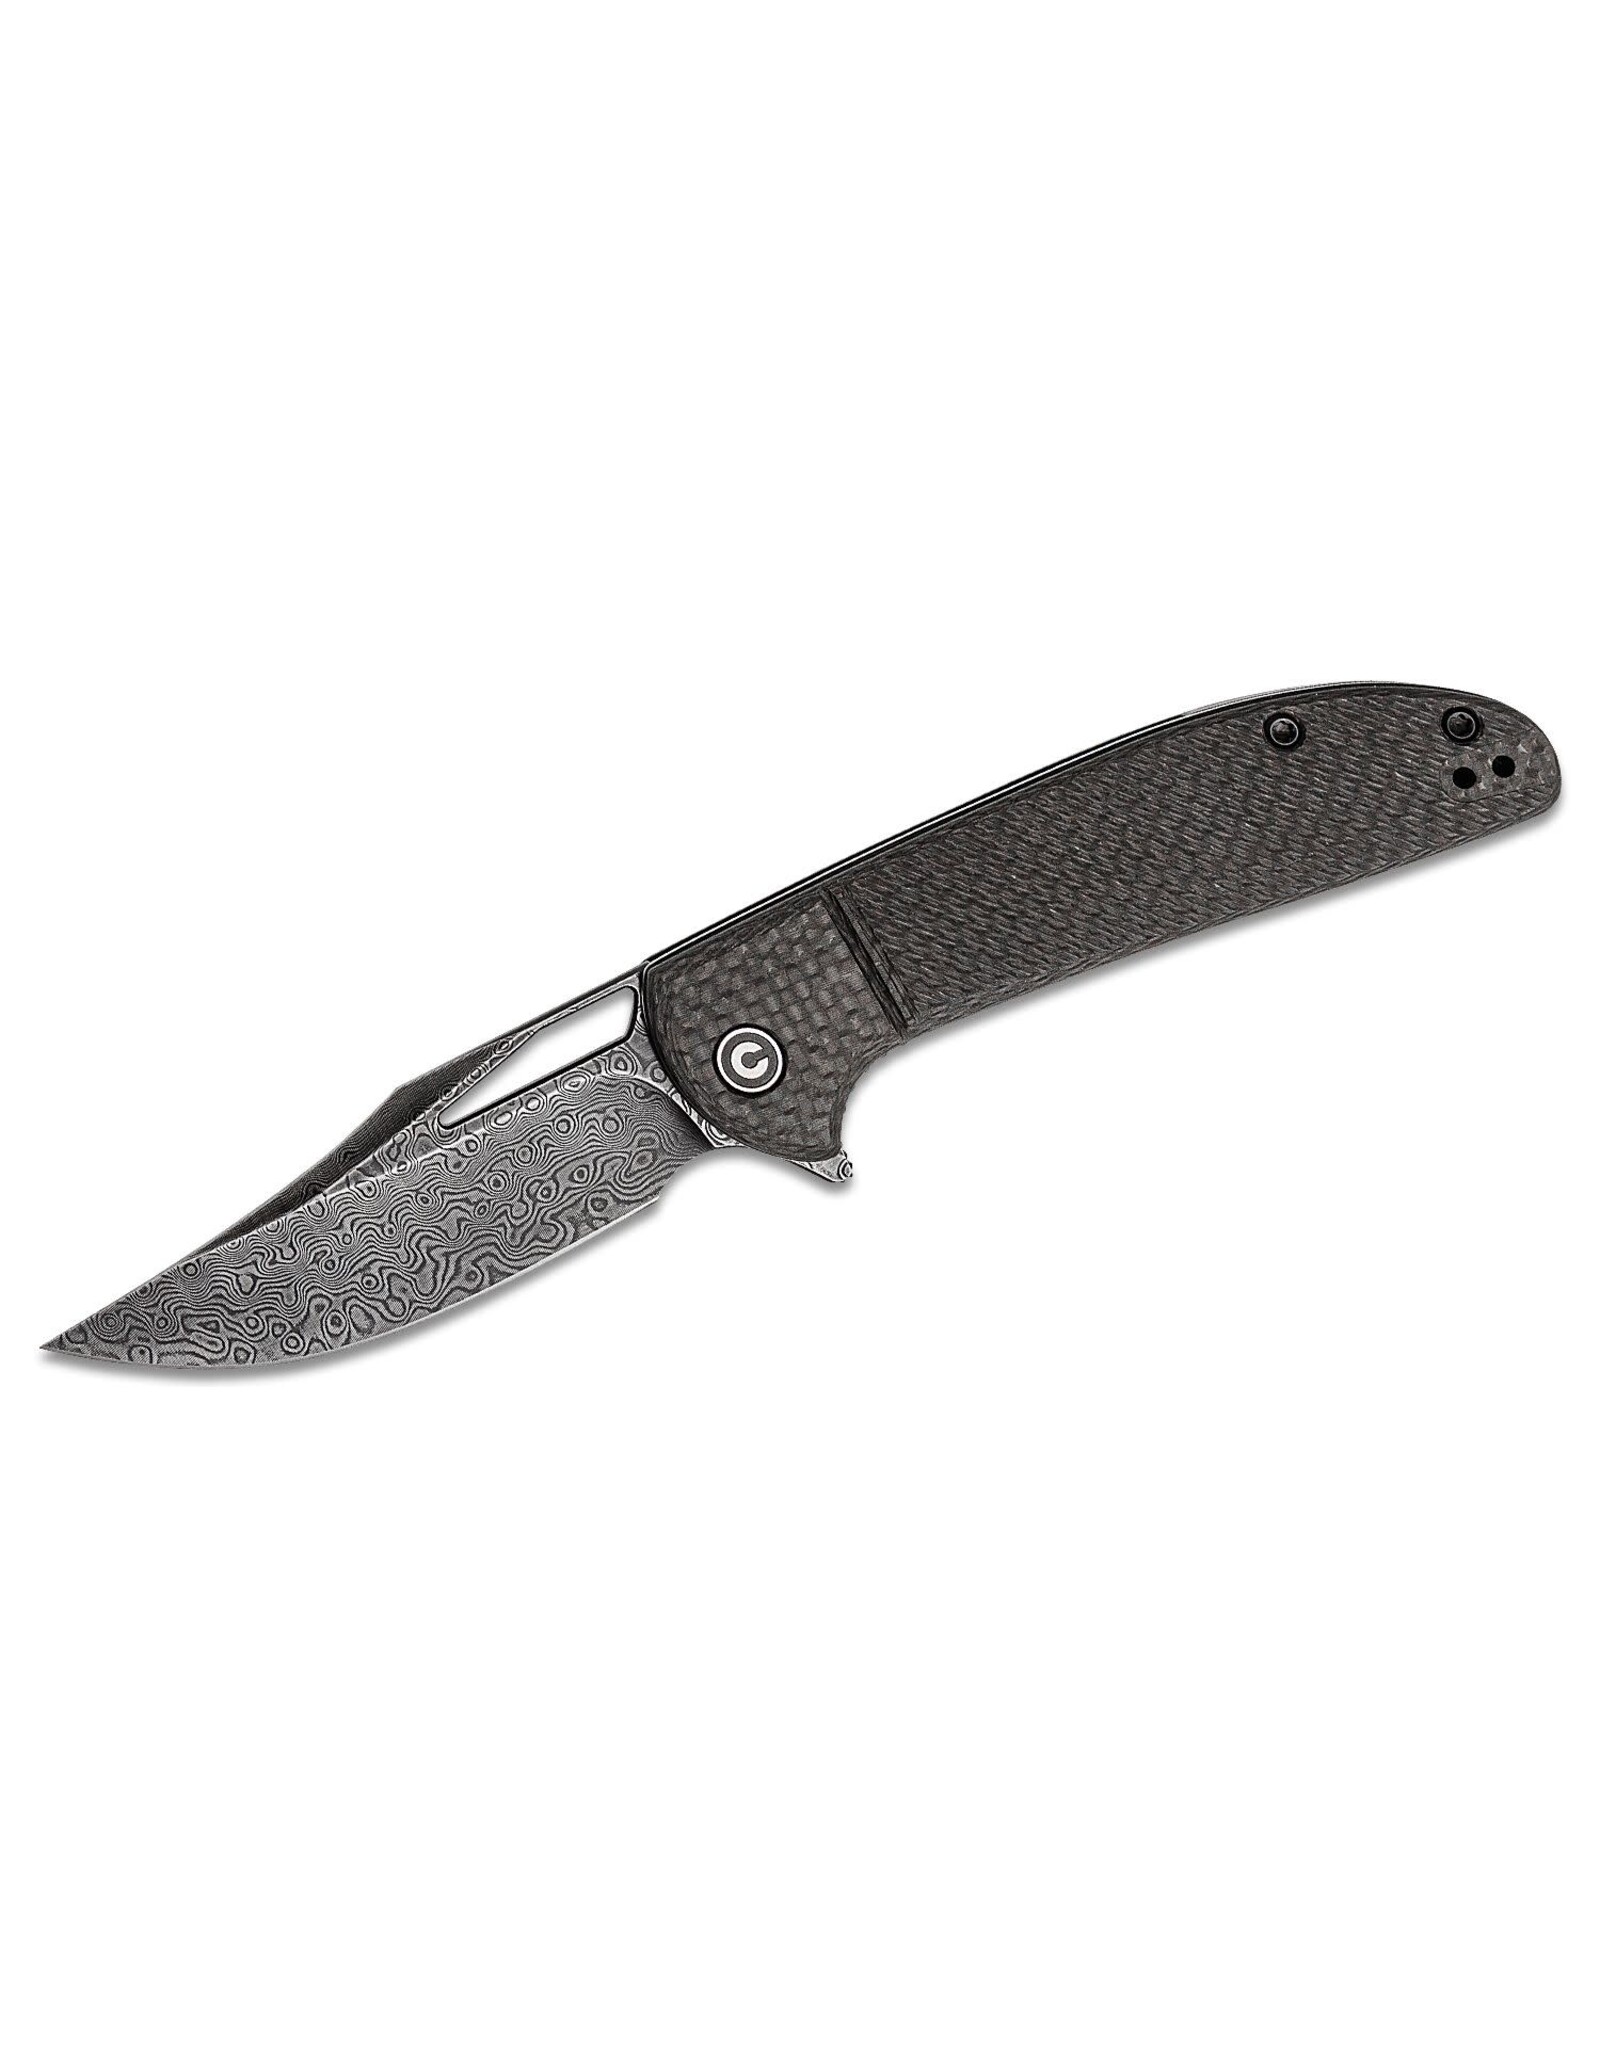 Civivi CIVIVI Knives C2013DS-1 Ortis Flipper Knife 3.25" Damascus Clip Point Blade, Milled Twill Carbon Fiber Handles